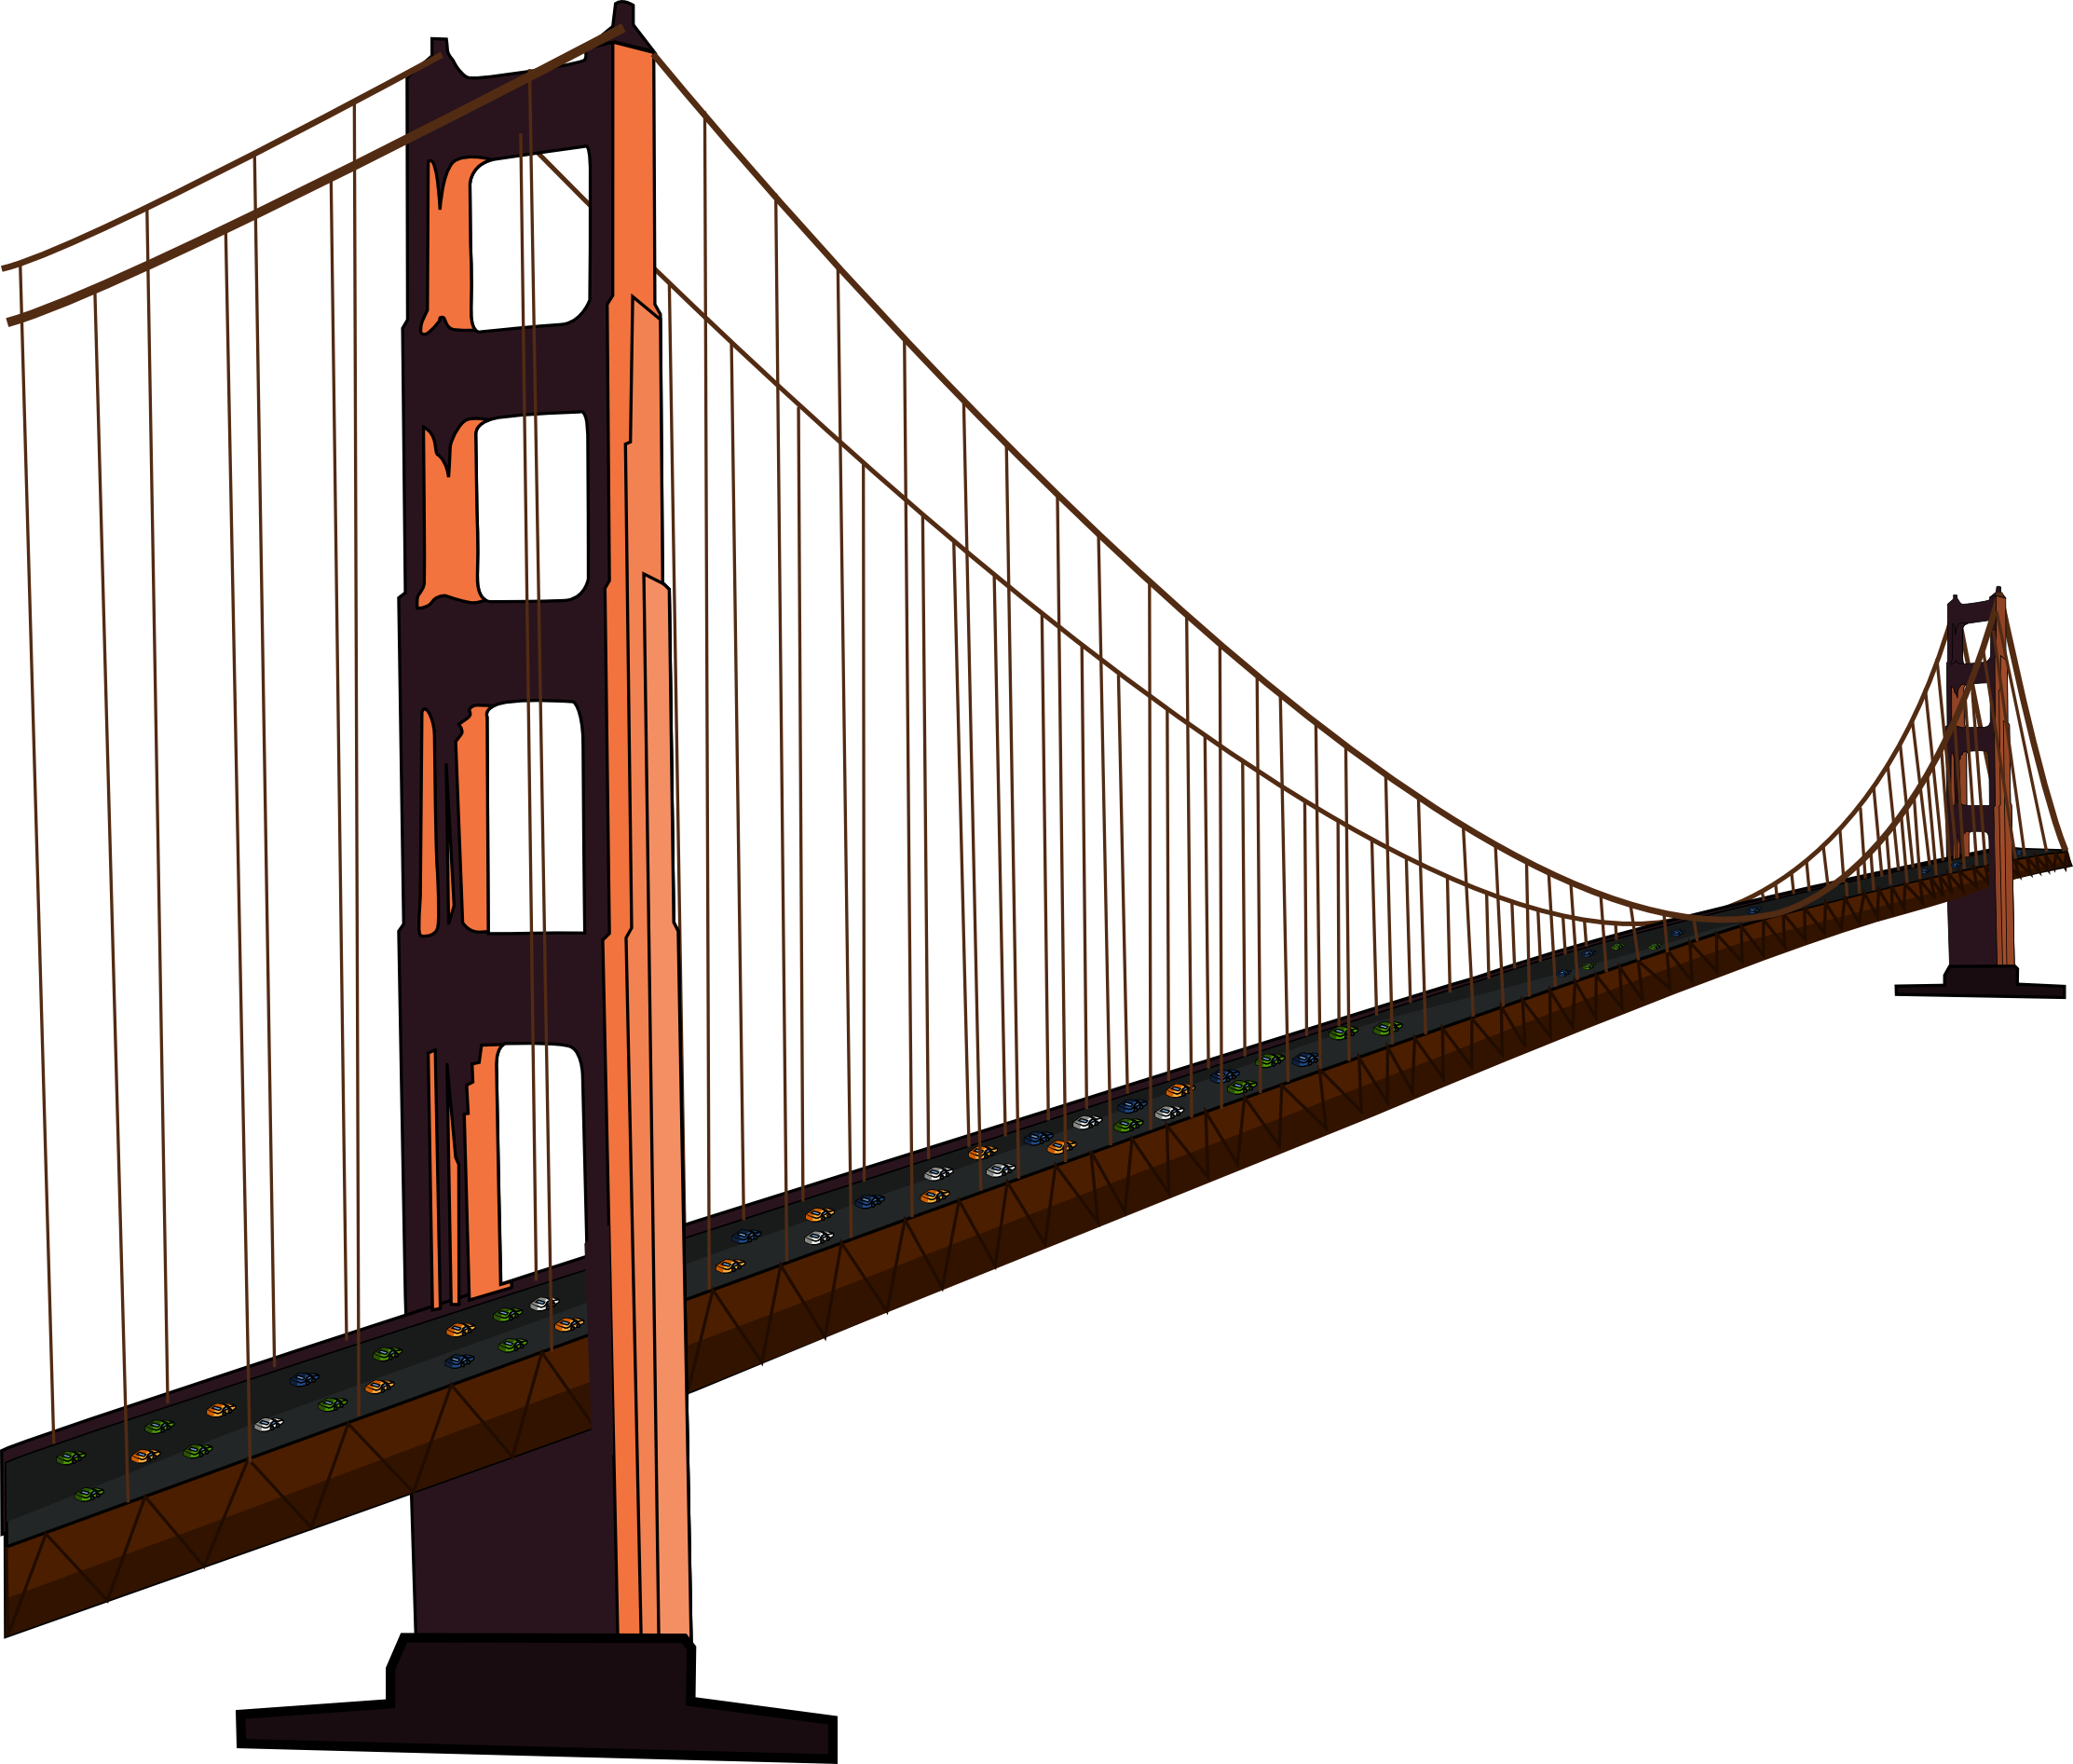 Golden gate bridge clipart 20 free Cliparts | Download images on